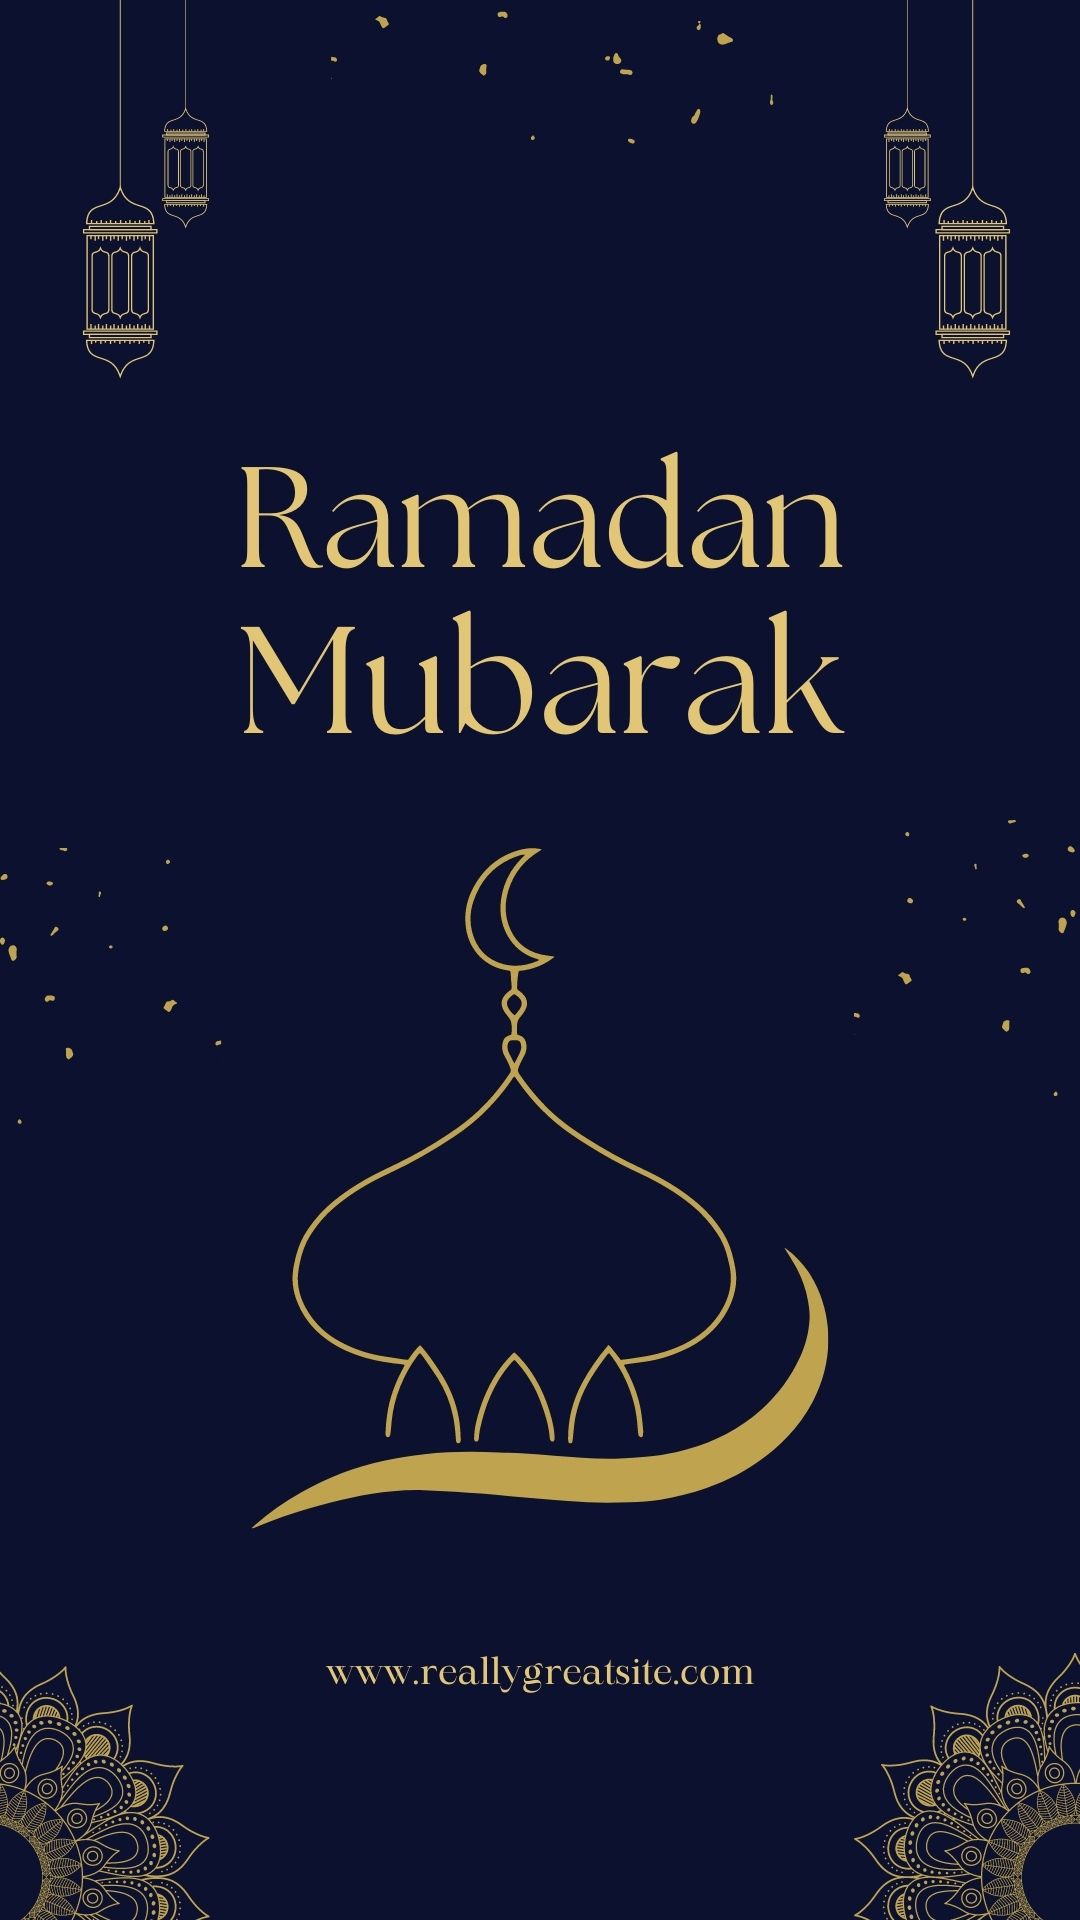 Best ramadan mubarak images for Instagram Story